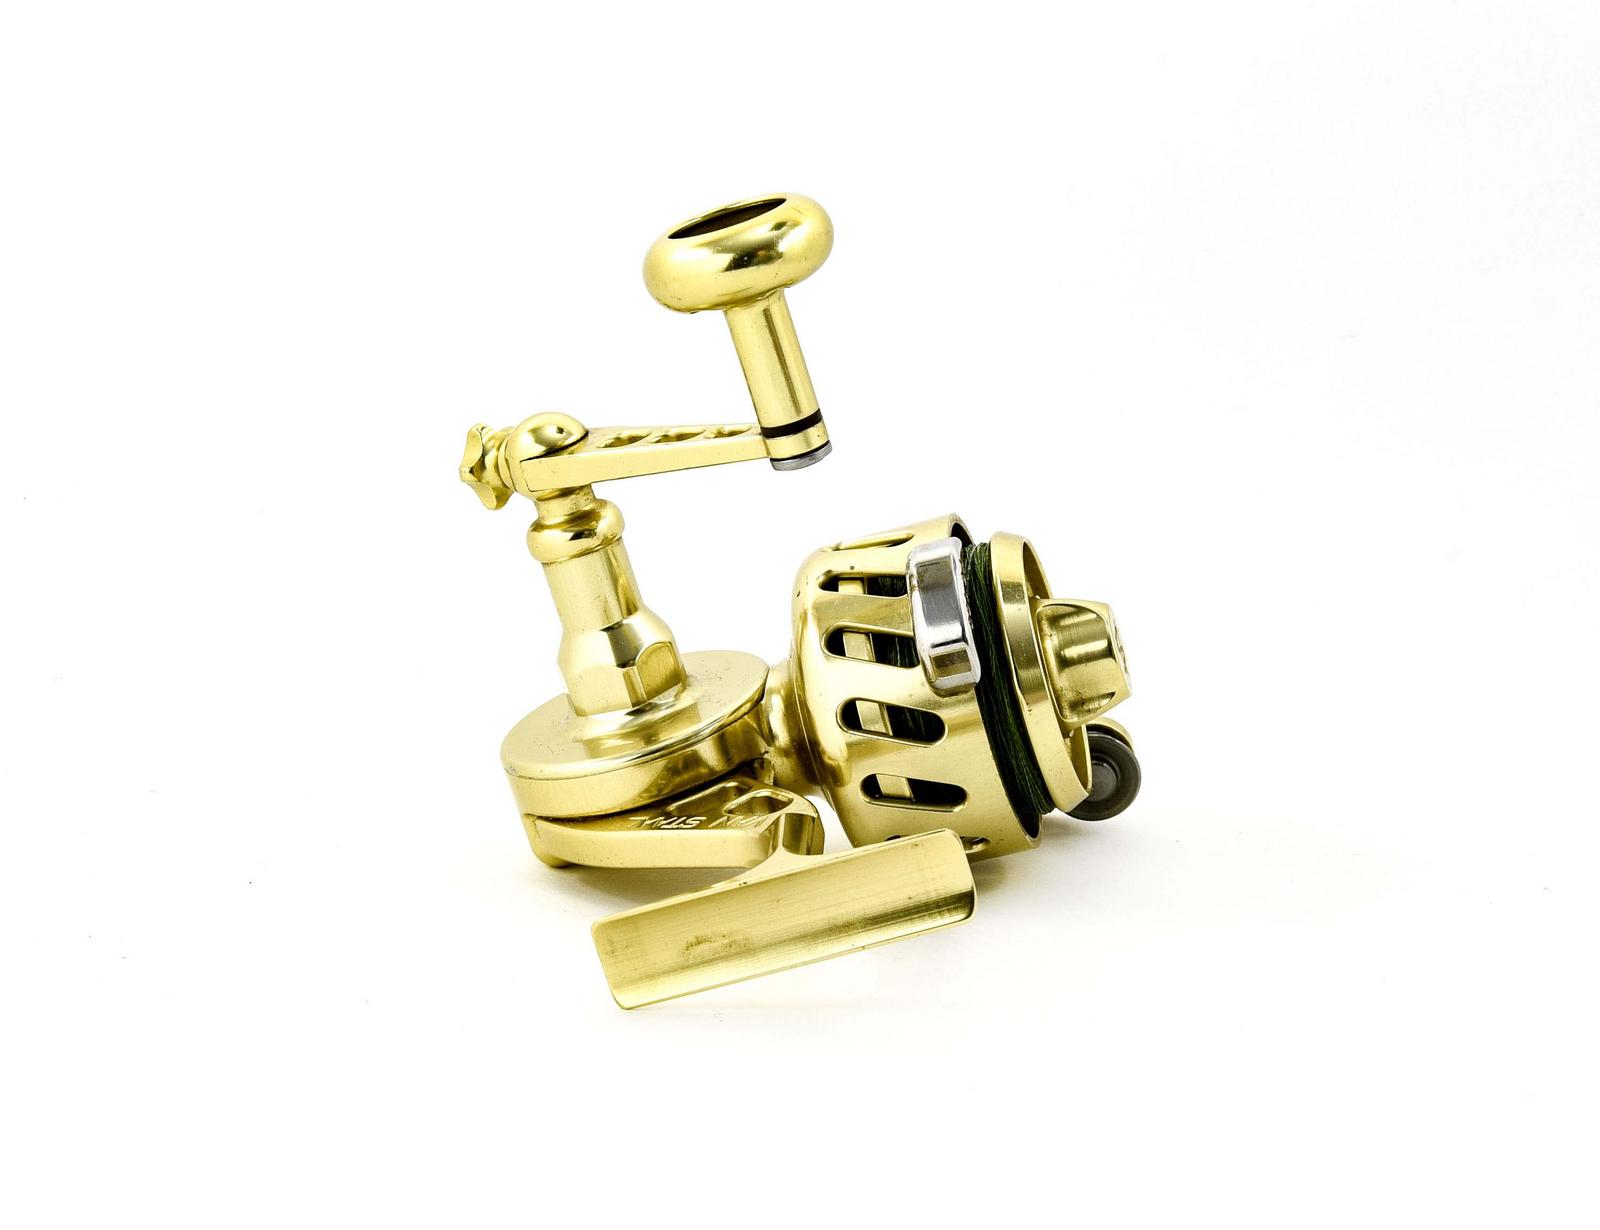 VAN STAAL VS300 Gold Spinning Reel USED JP Used $944.99 - PicClick